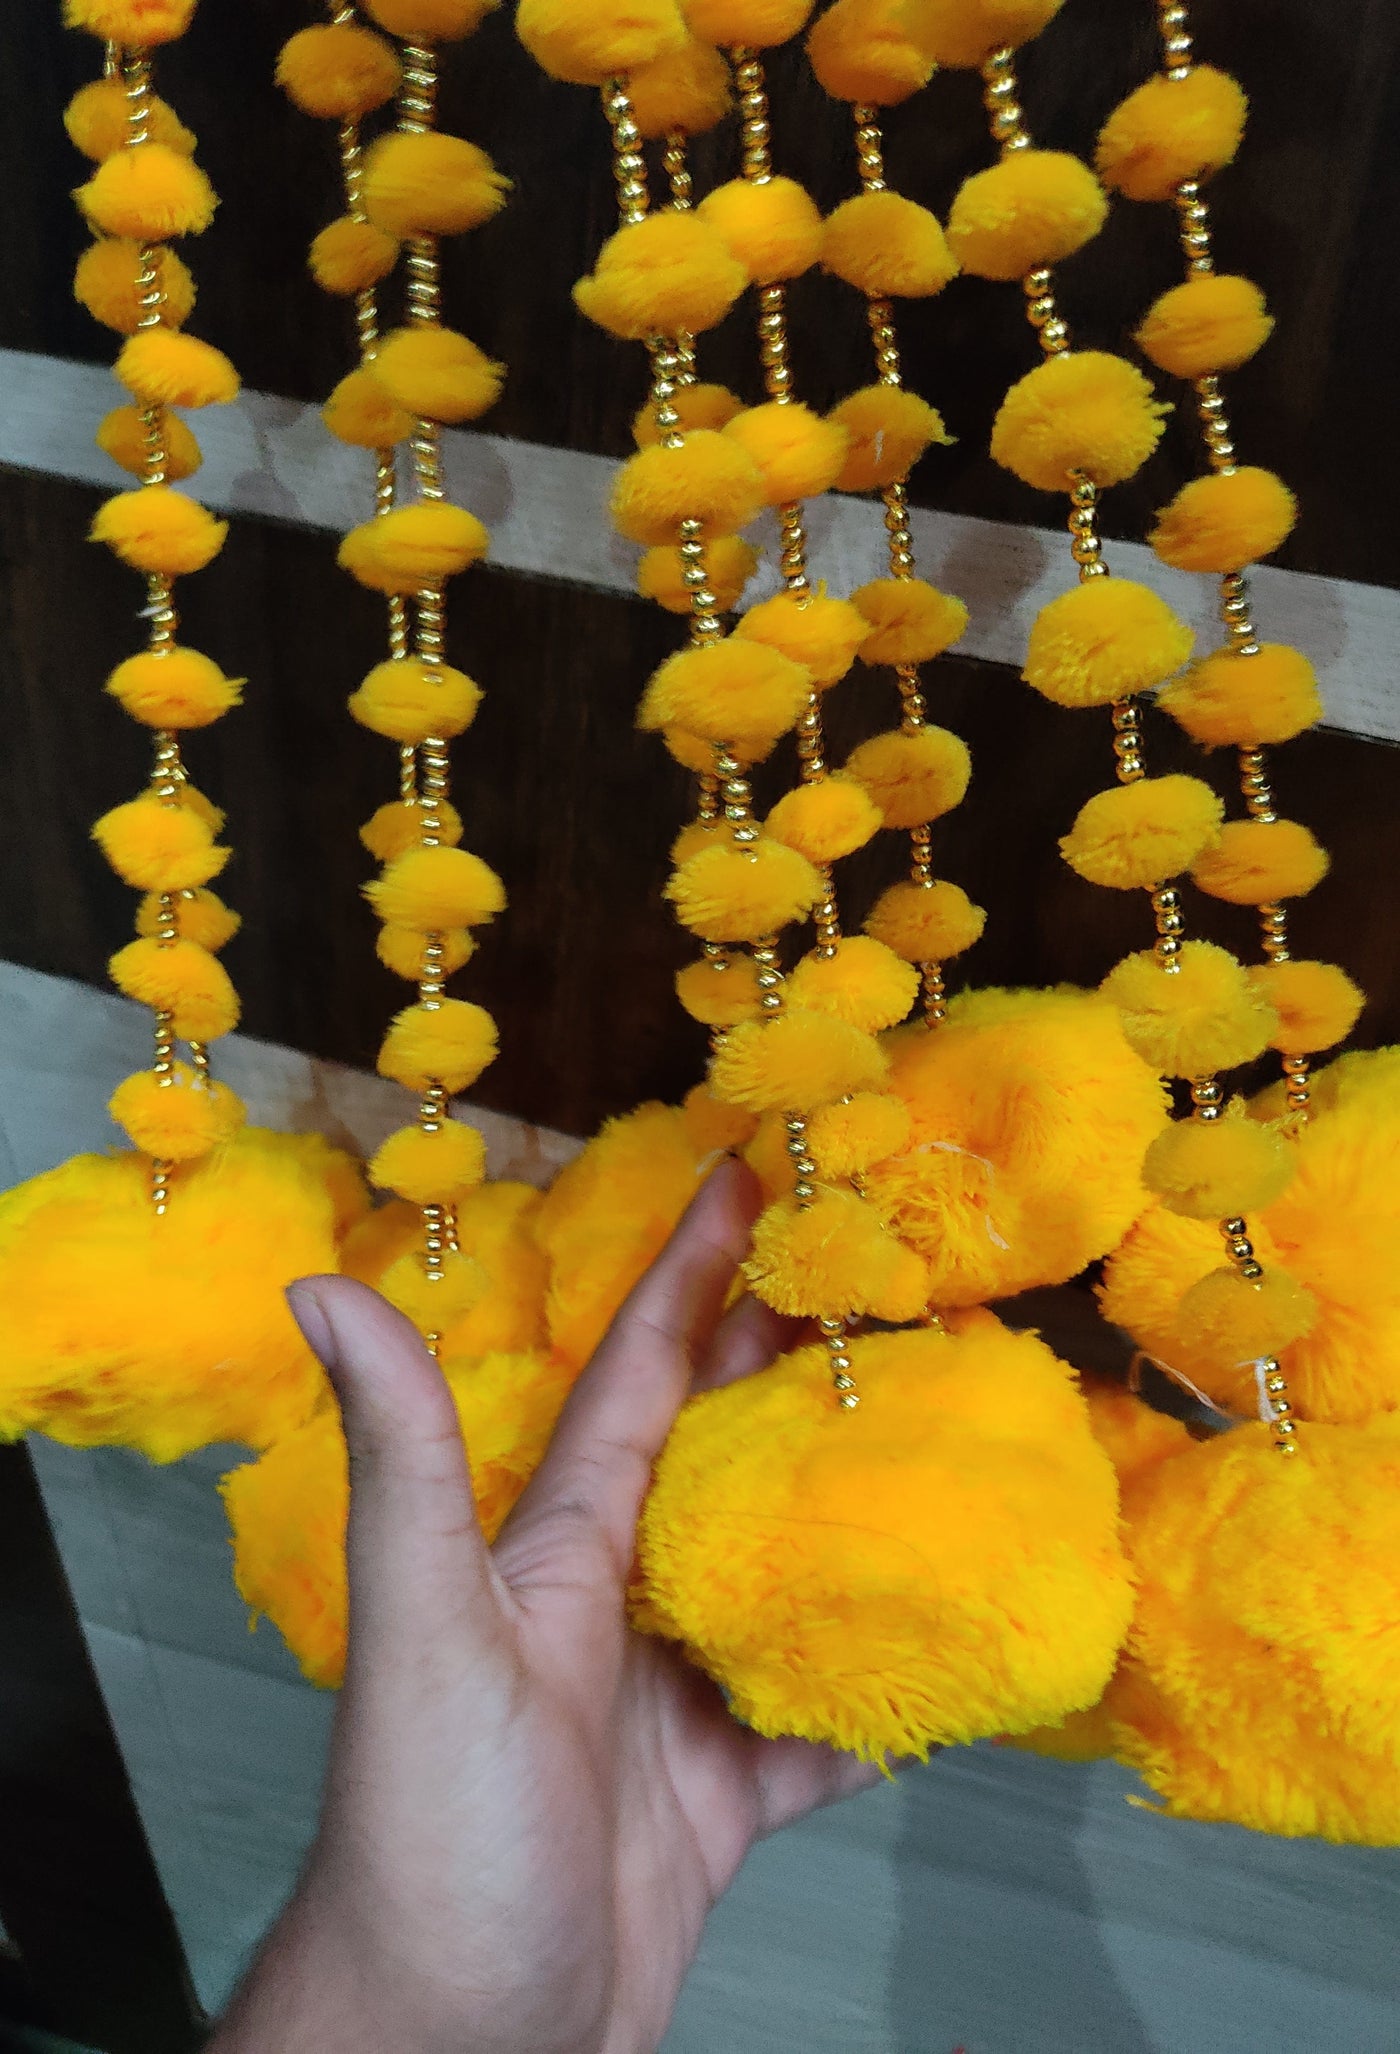 LAMANSH Decor LAMANSH® ( 4 Feet ) Pack of 50 Wool Pom Pom Hangings for Home Decor / Front Door Diwali Wedding Pom Poms Beads Bells Latkans for Backdrop event decoration